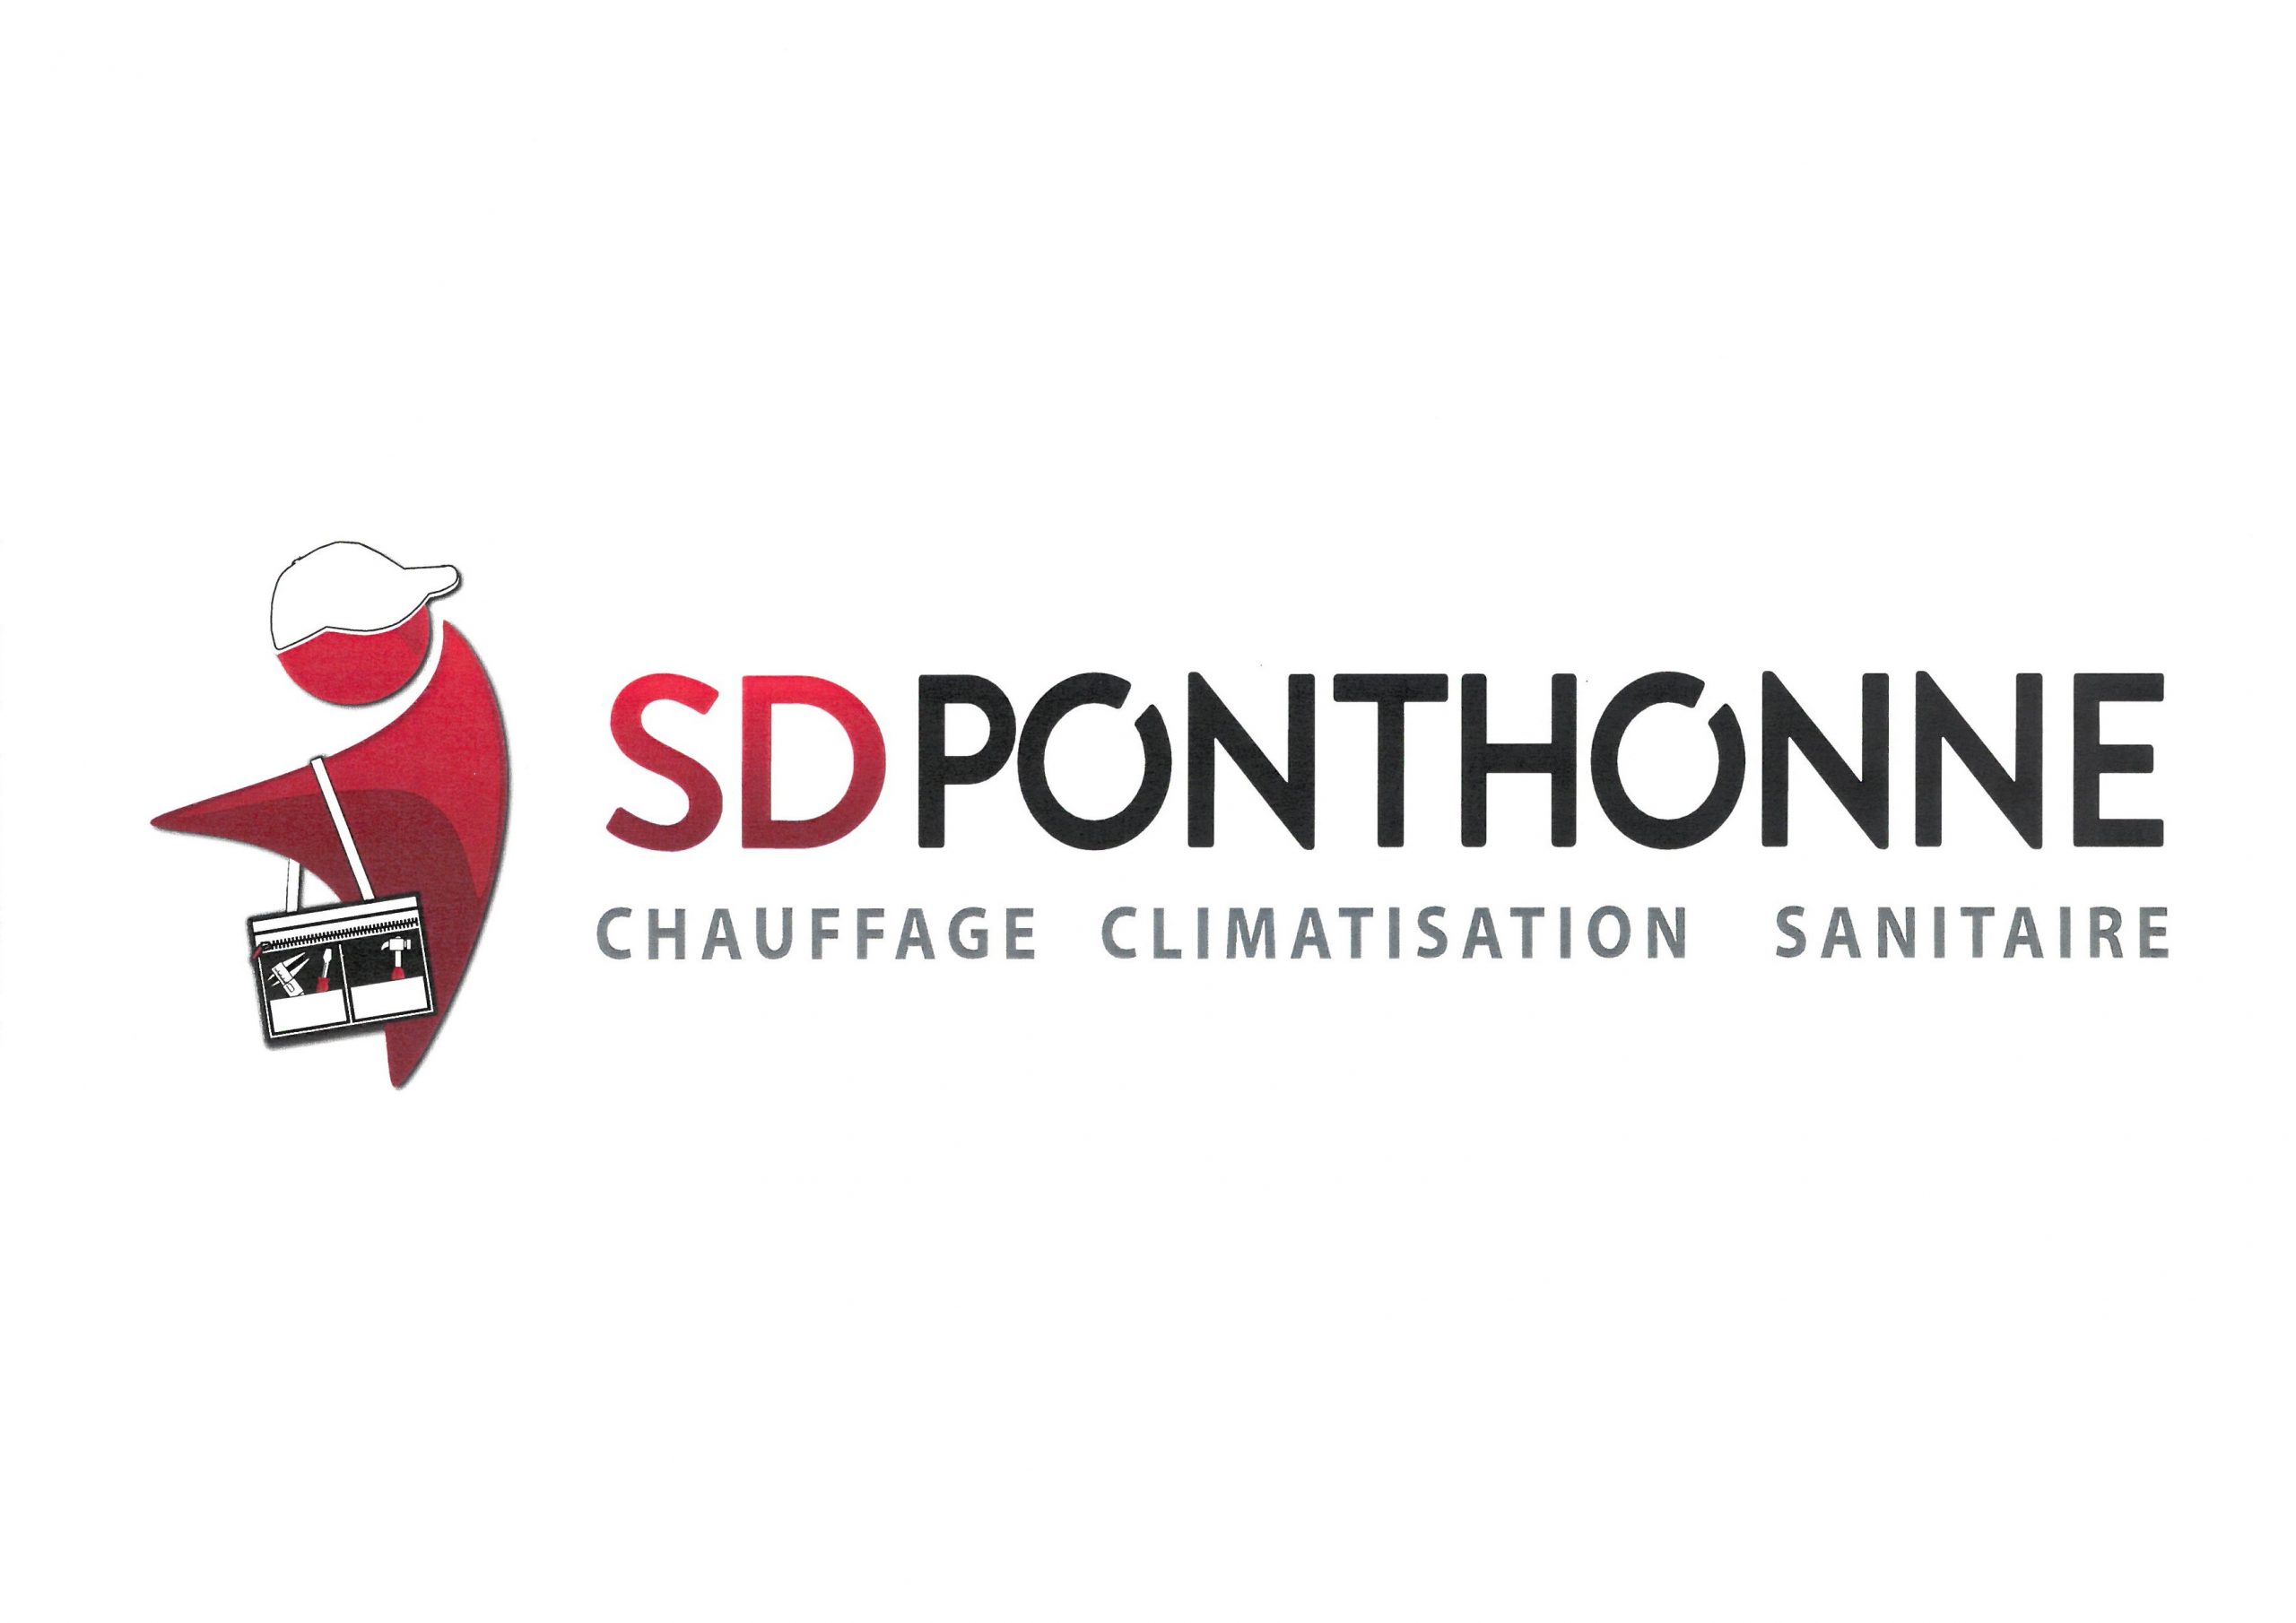 SD PONTHONNE